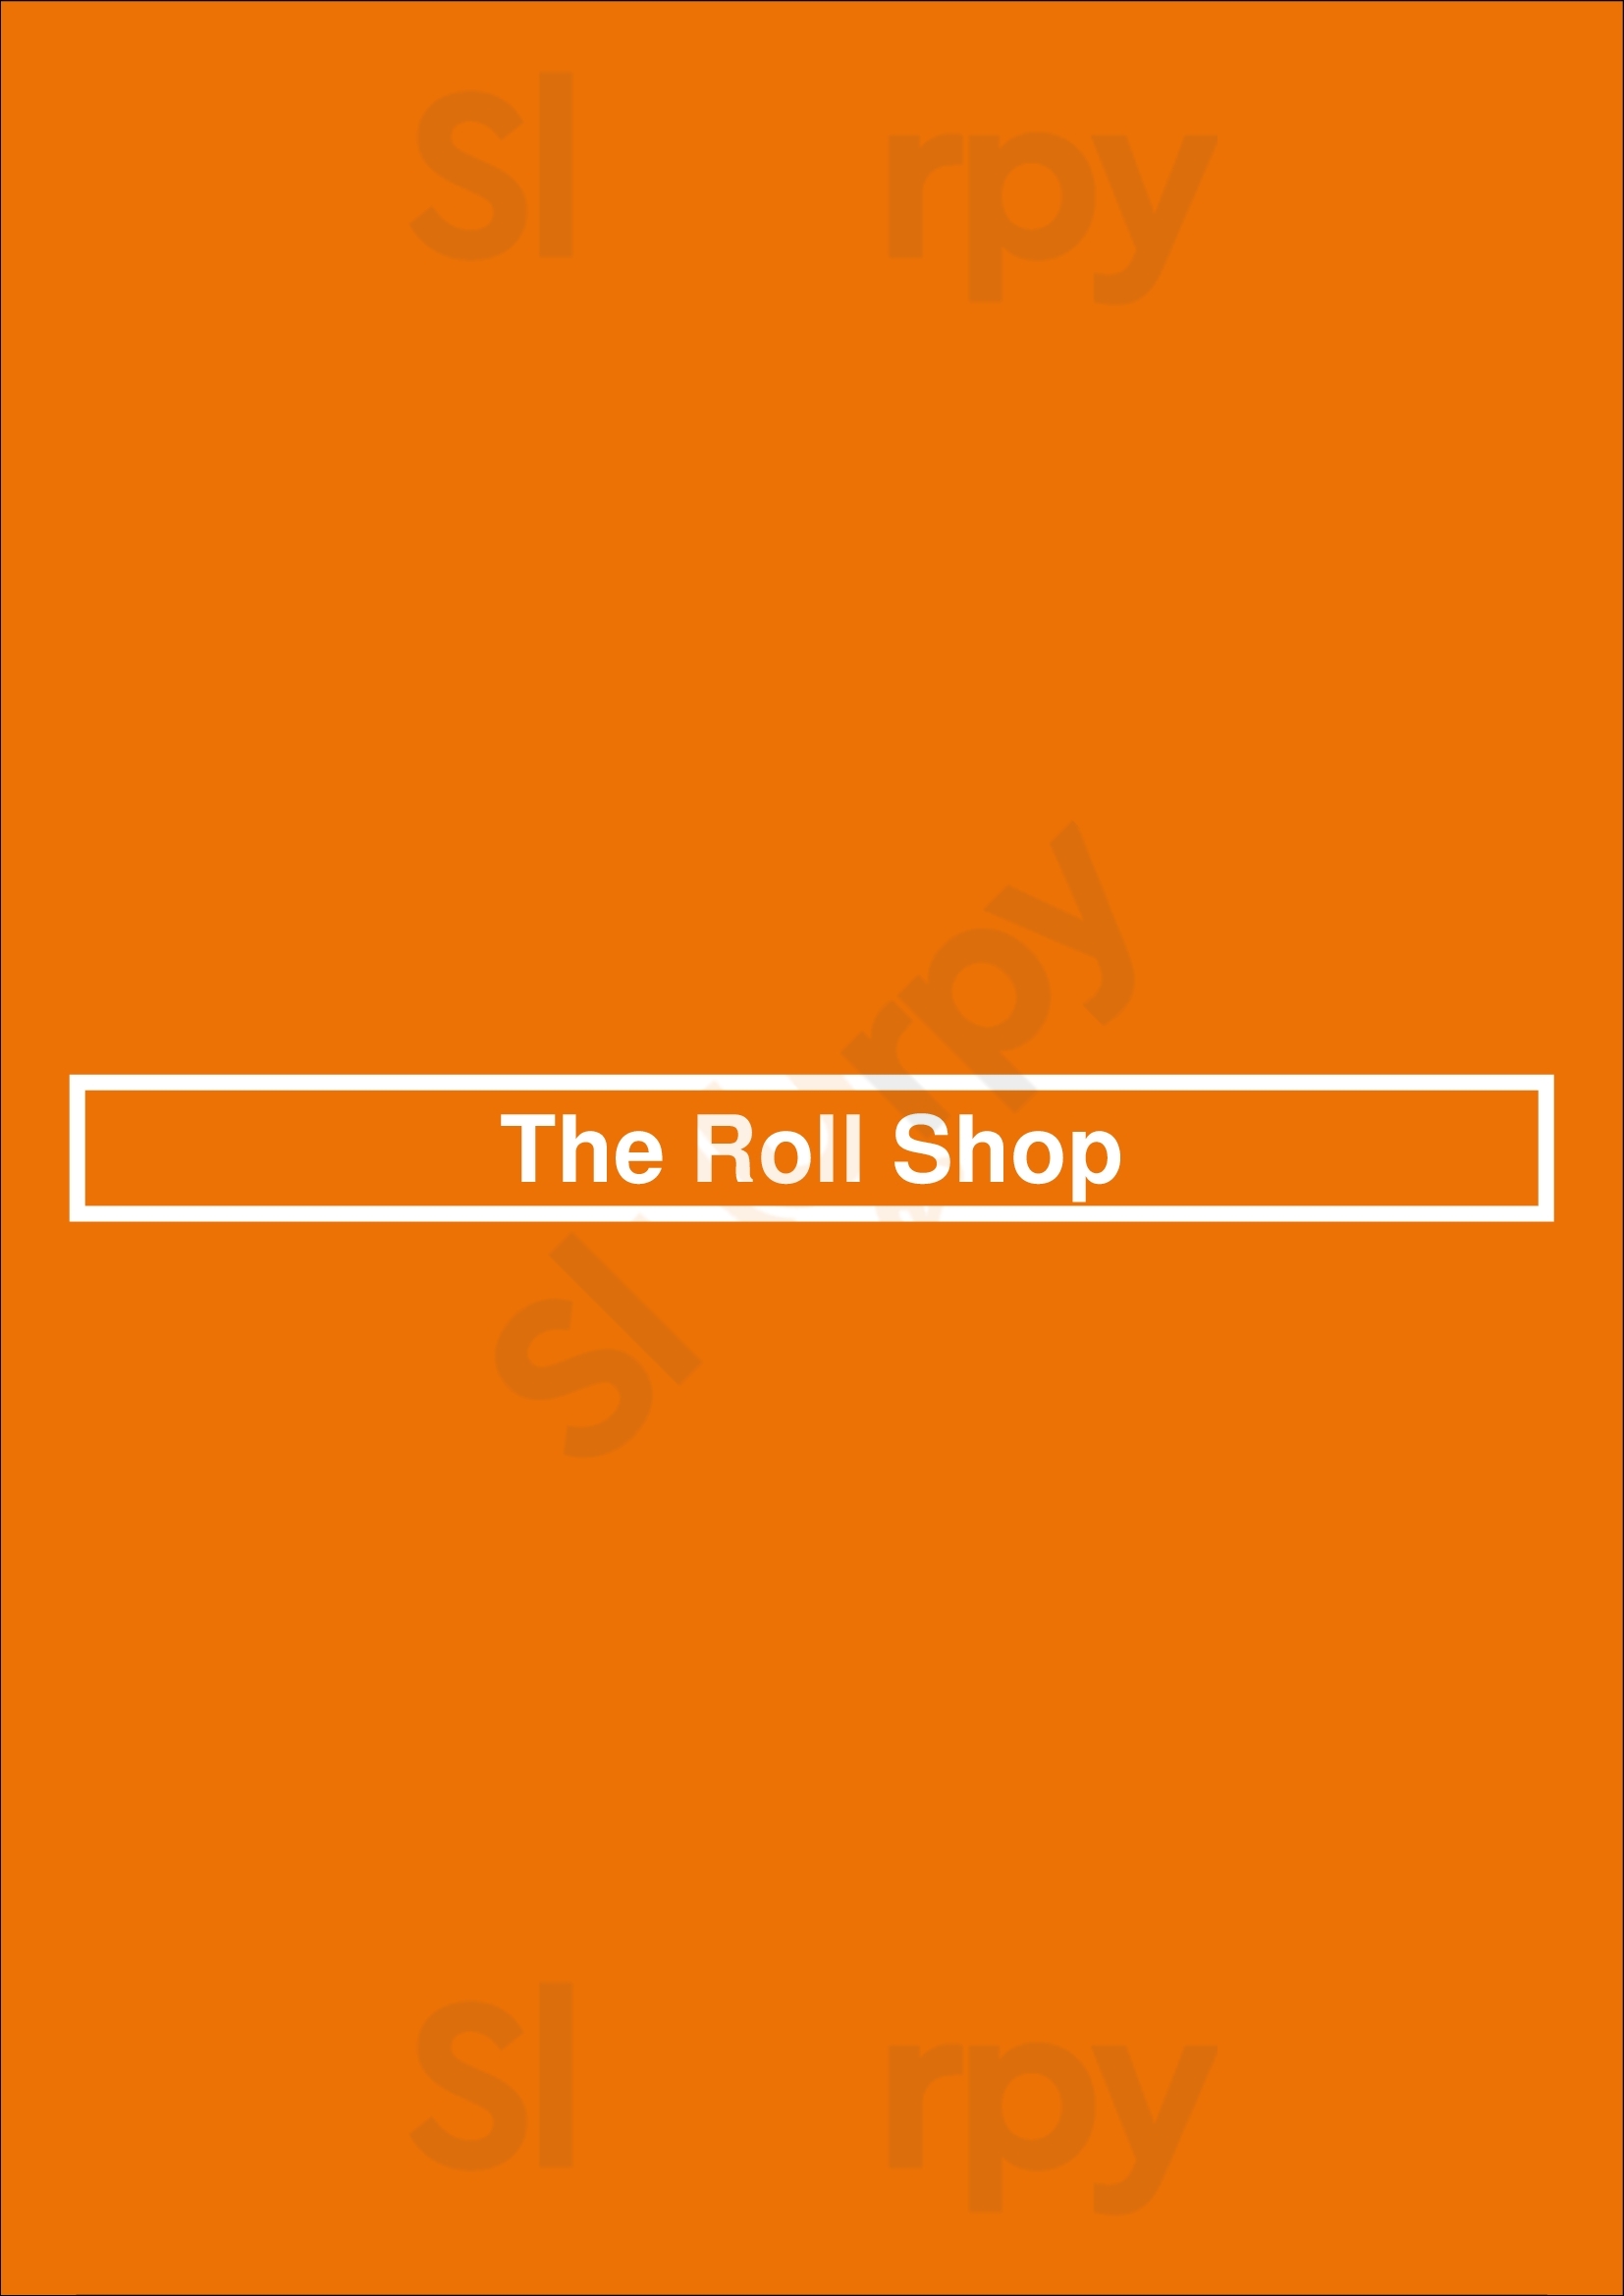 The Roll Shop Irvine Menu - 1